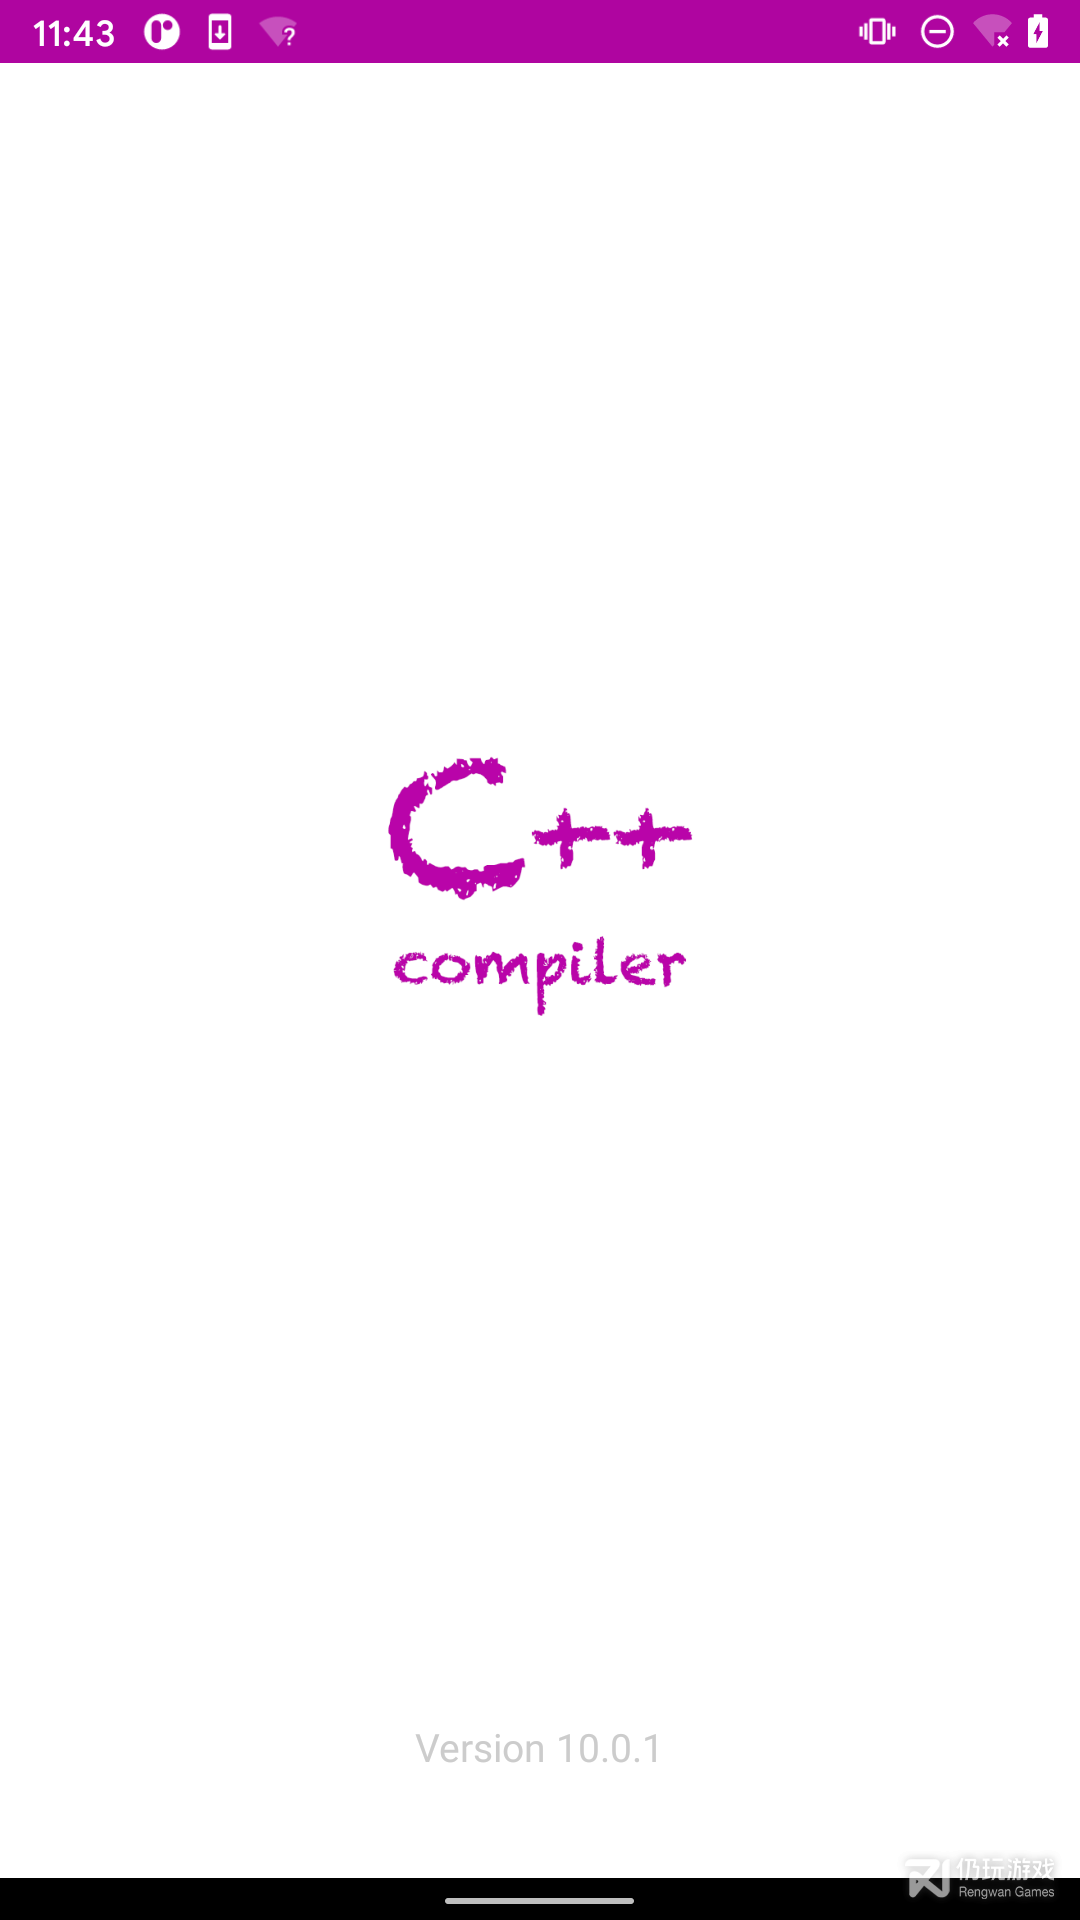 C++编译器